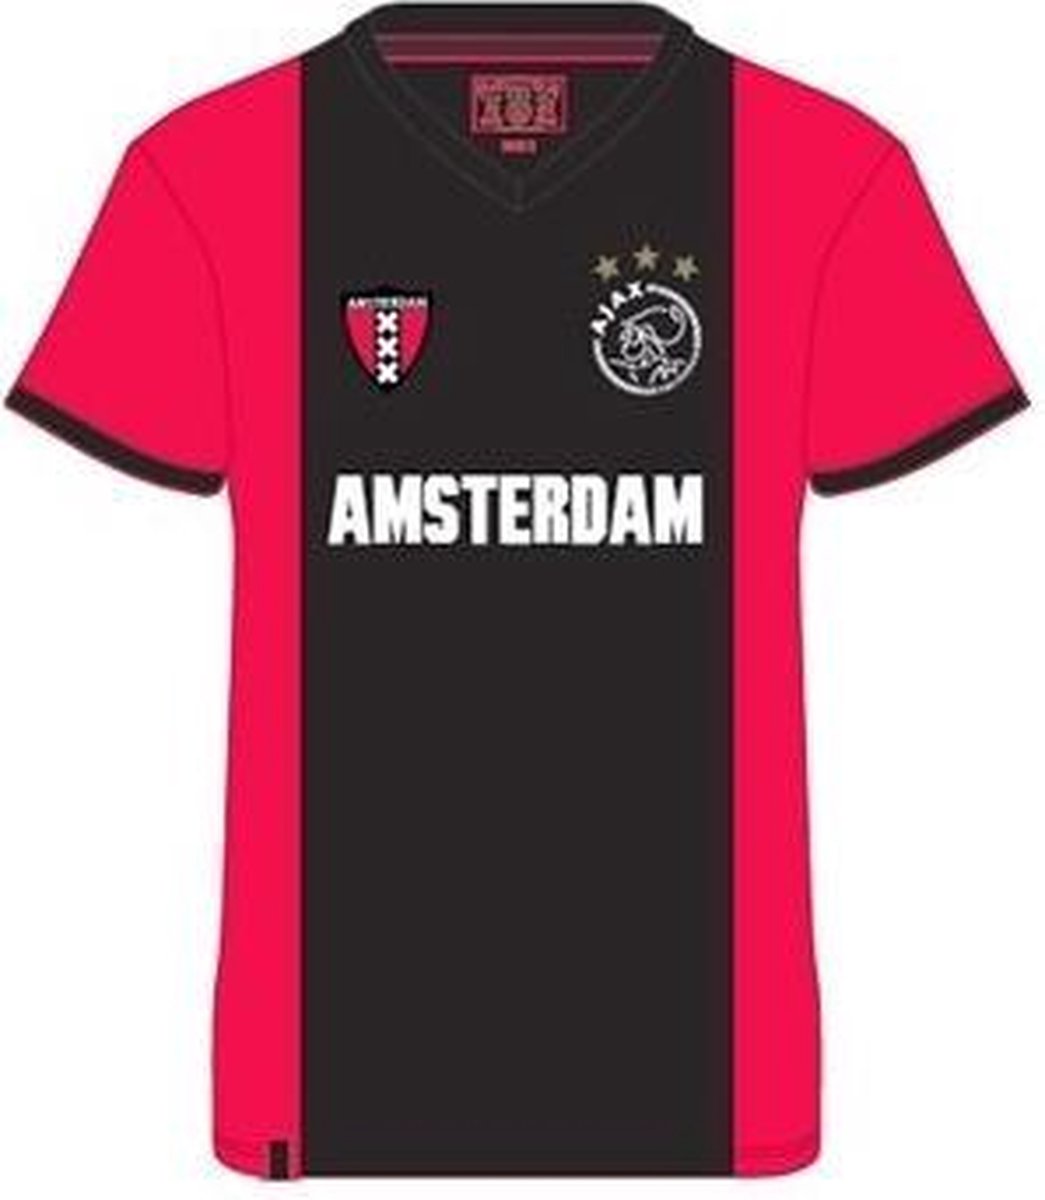 ontsnappen broeden Optimistisch T-shirt ajax rood/zwart/rood Amsterdam wapen maat 116 | bol.com